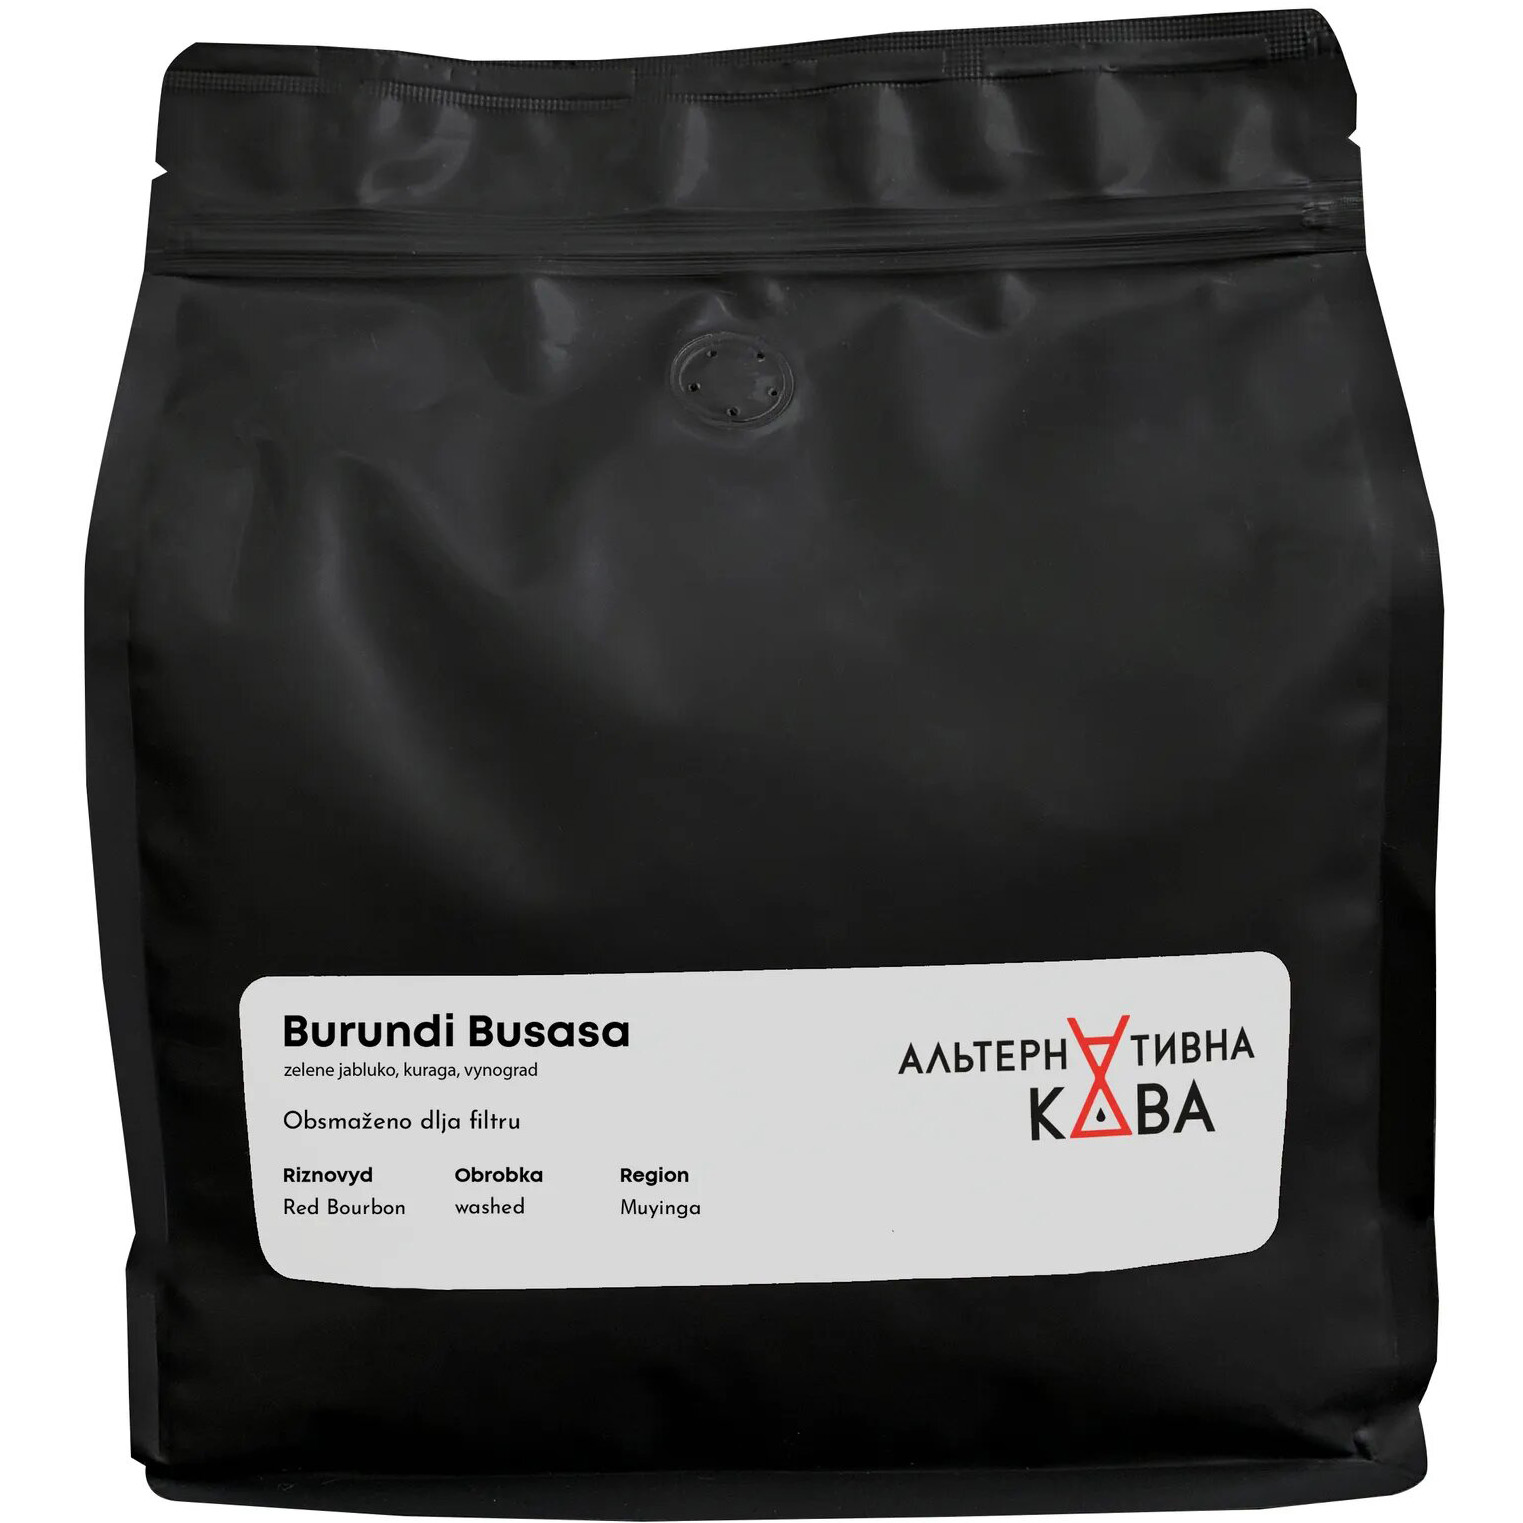 Кофе в зернах Альтернативна Кава Burundi Busasa арабика 1 кг - фото 1